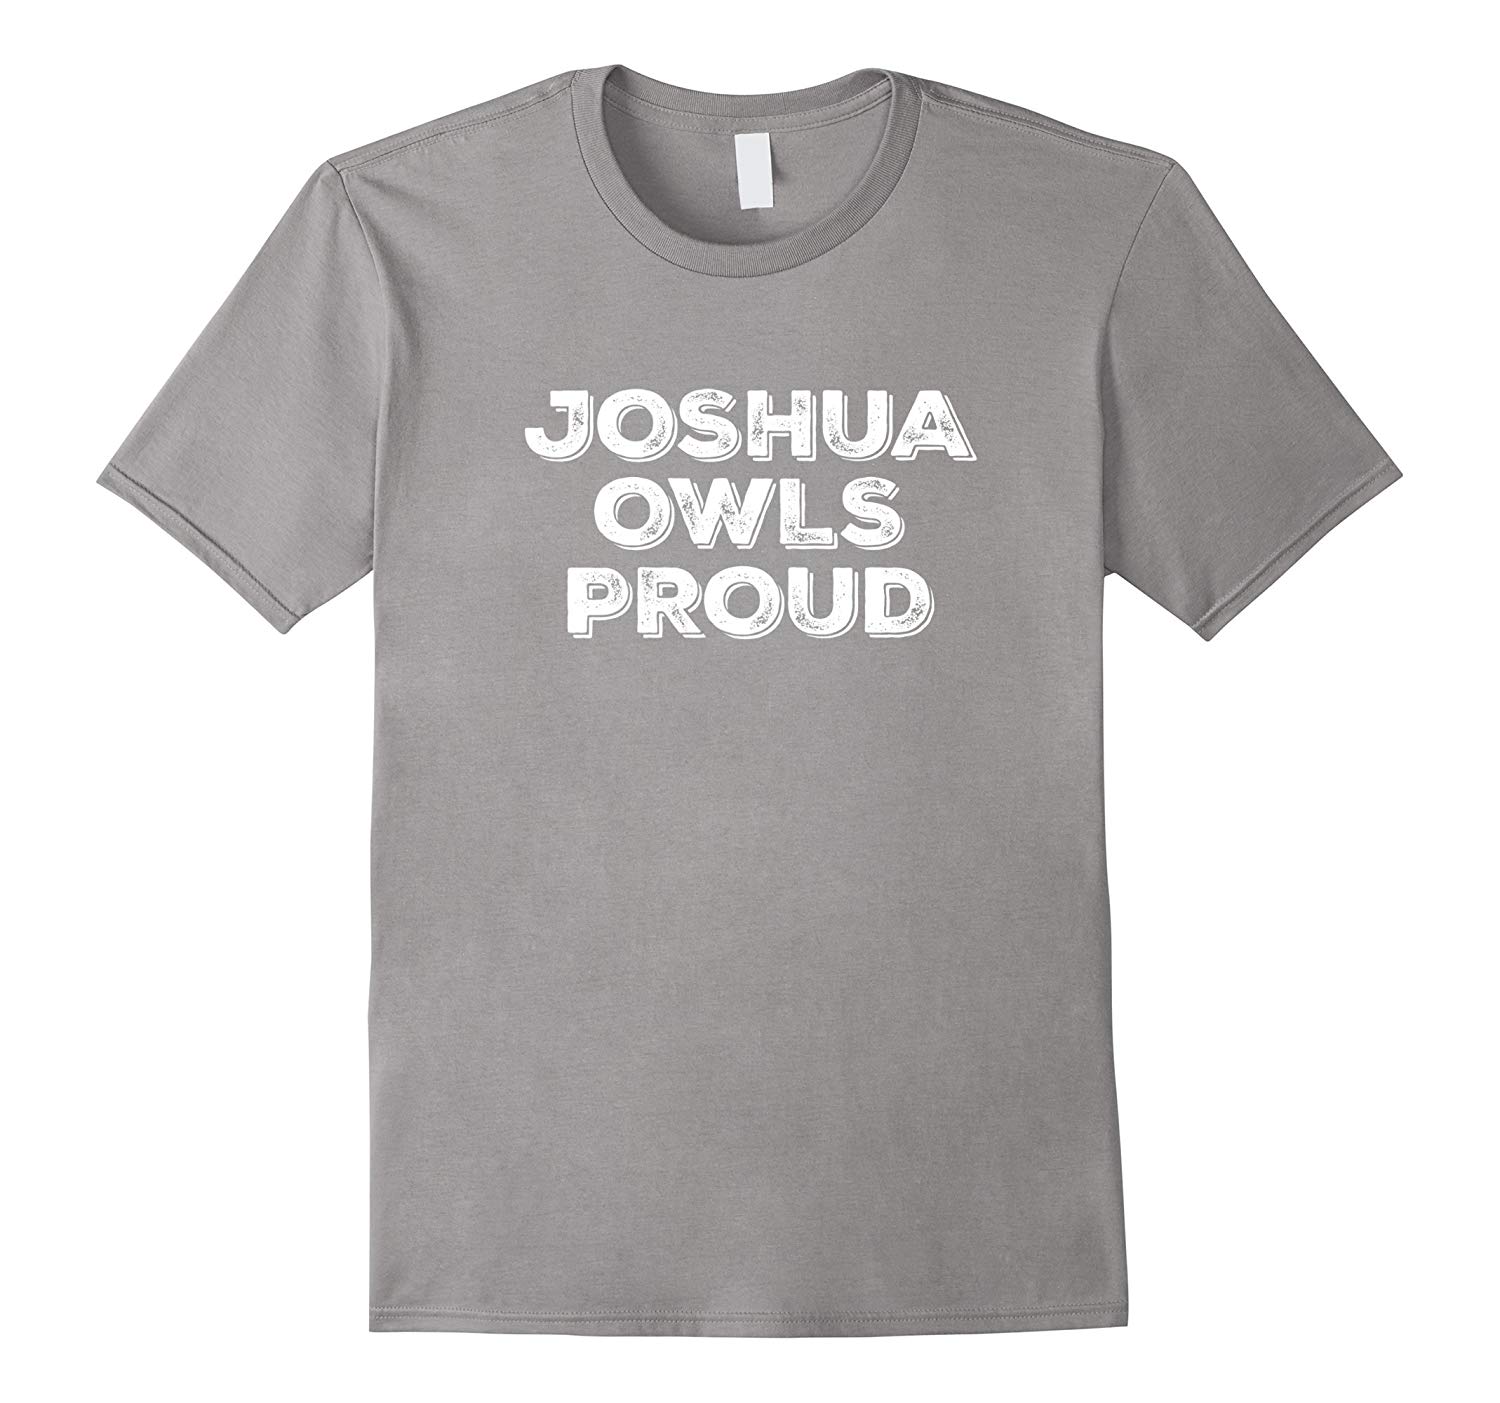 Joshua Owls Logo - Amazon.com: Joshua Owls Proud School T-Shirt: Clothing